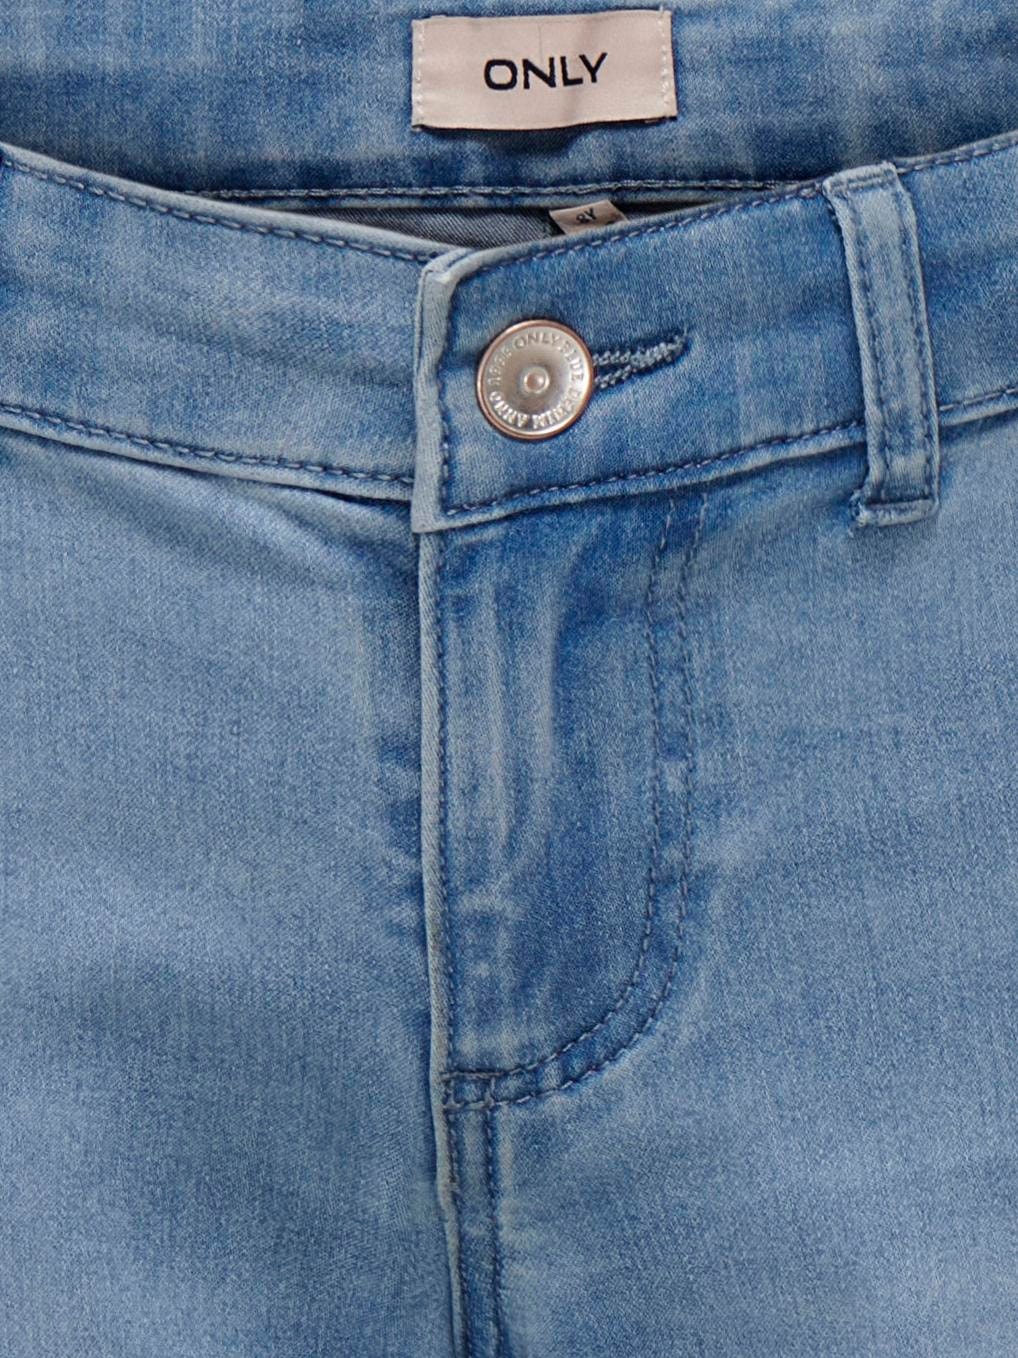 ONLY Jeans Wide Leg Fit -Light Blue Denim - 15312975